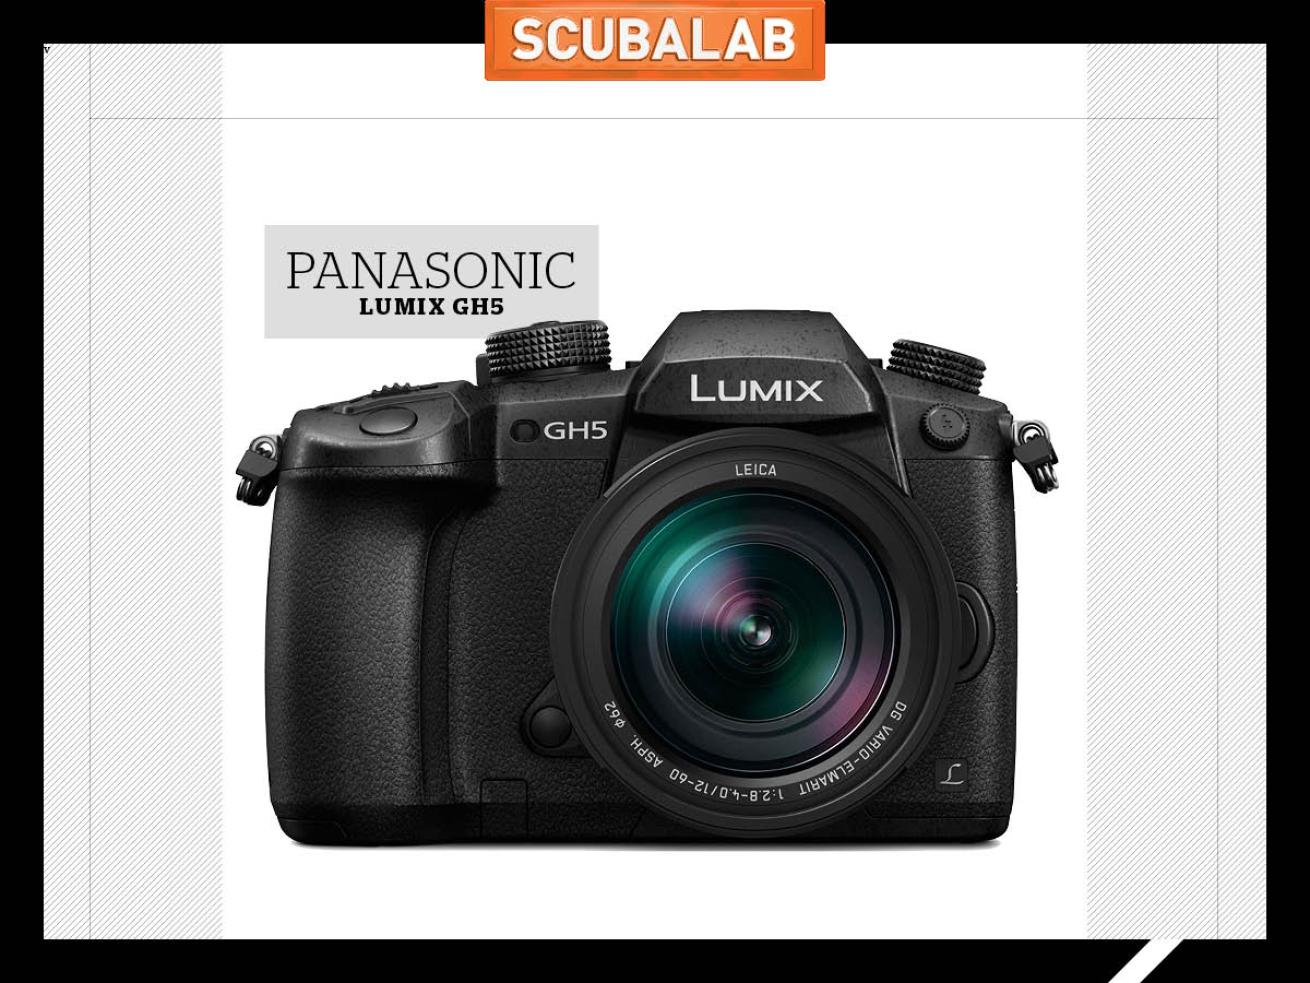 Panasonic Lumix GH5 camera for underwater photography